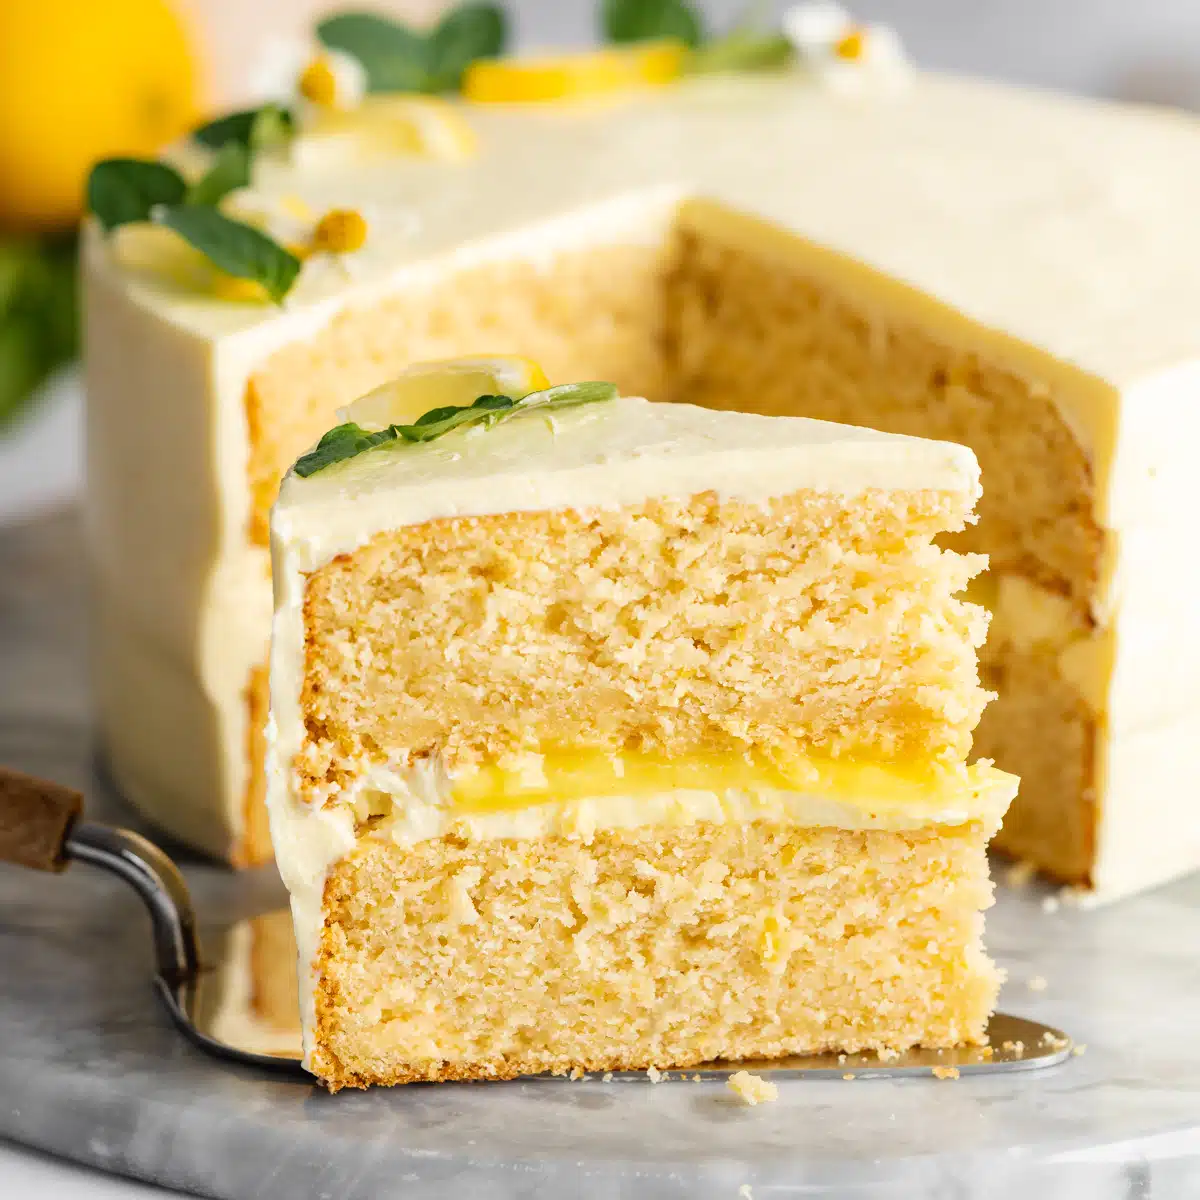 a slice of vegan lemon cake with lemon curd filling.